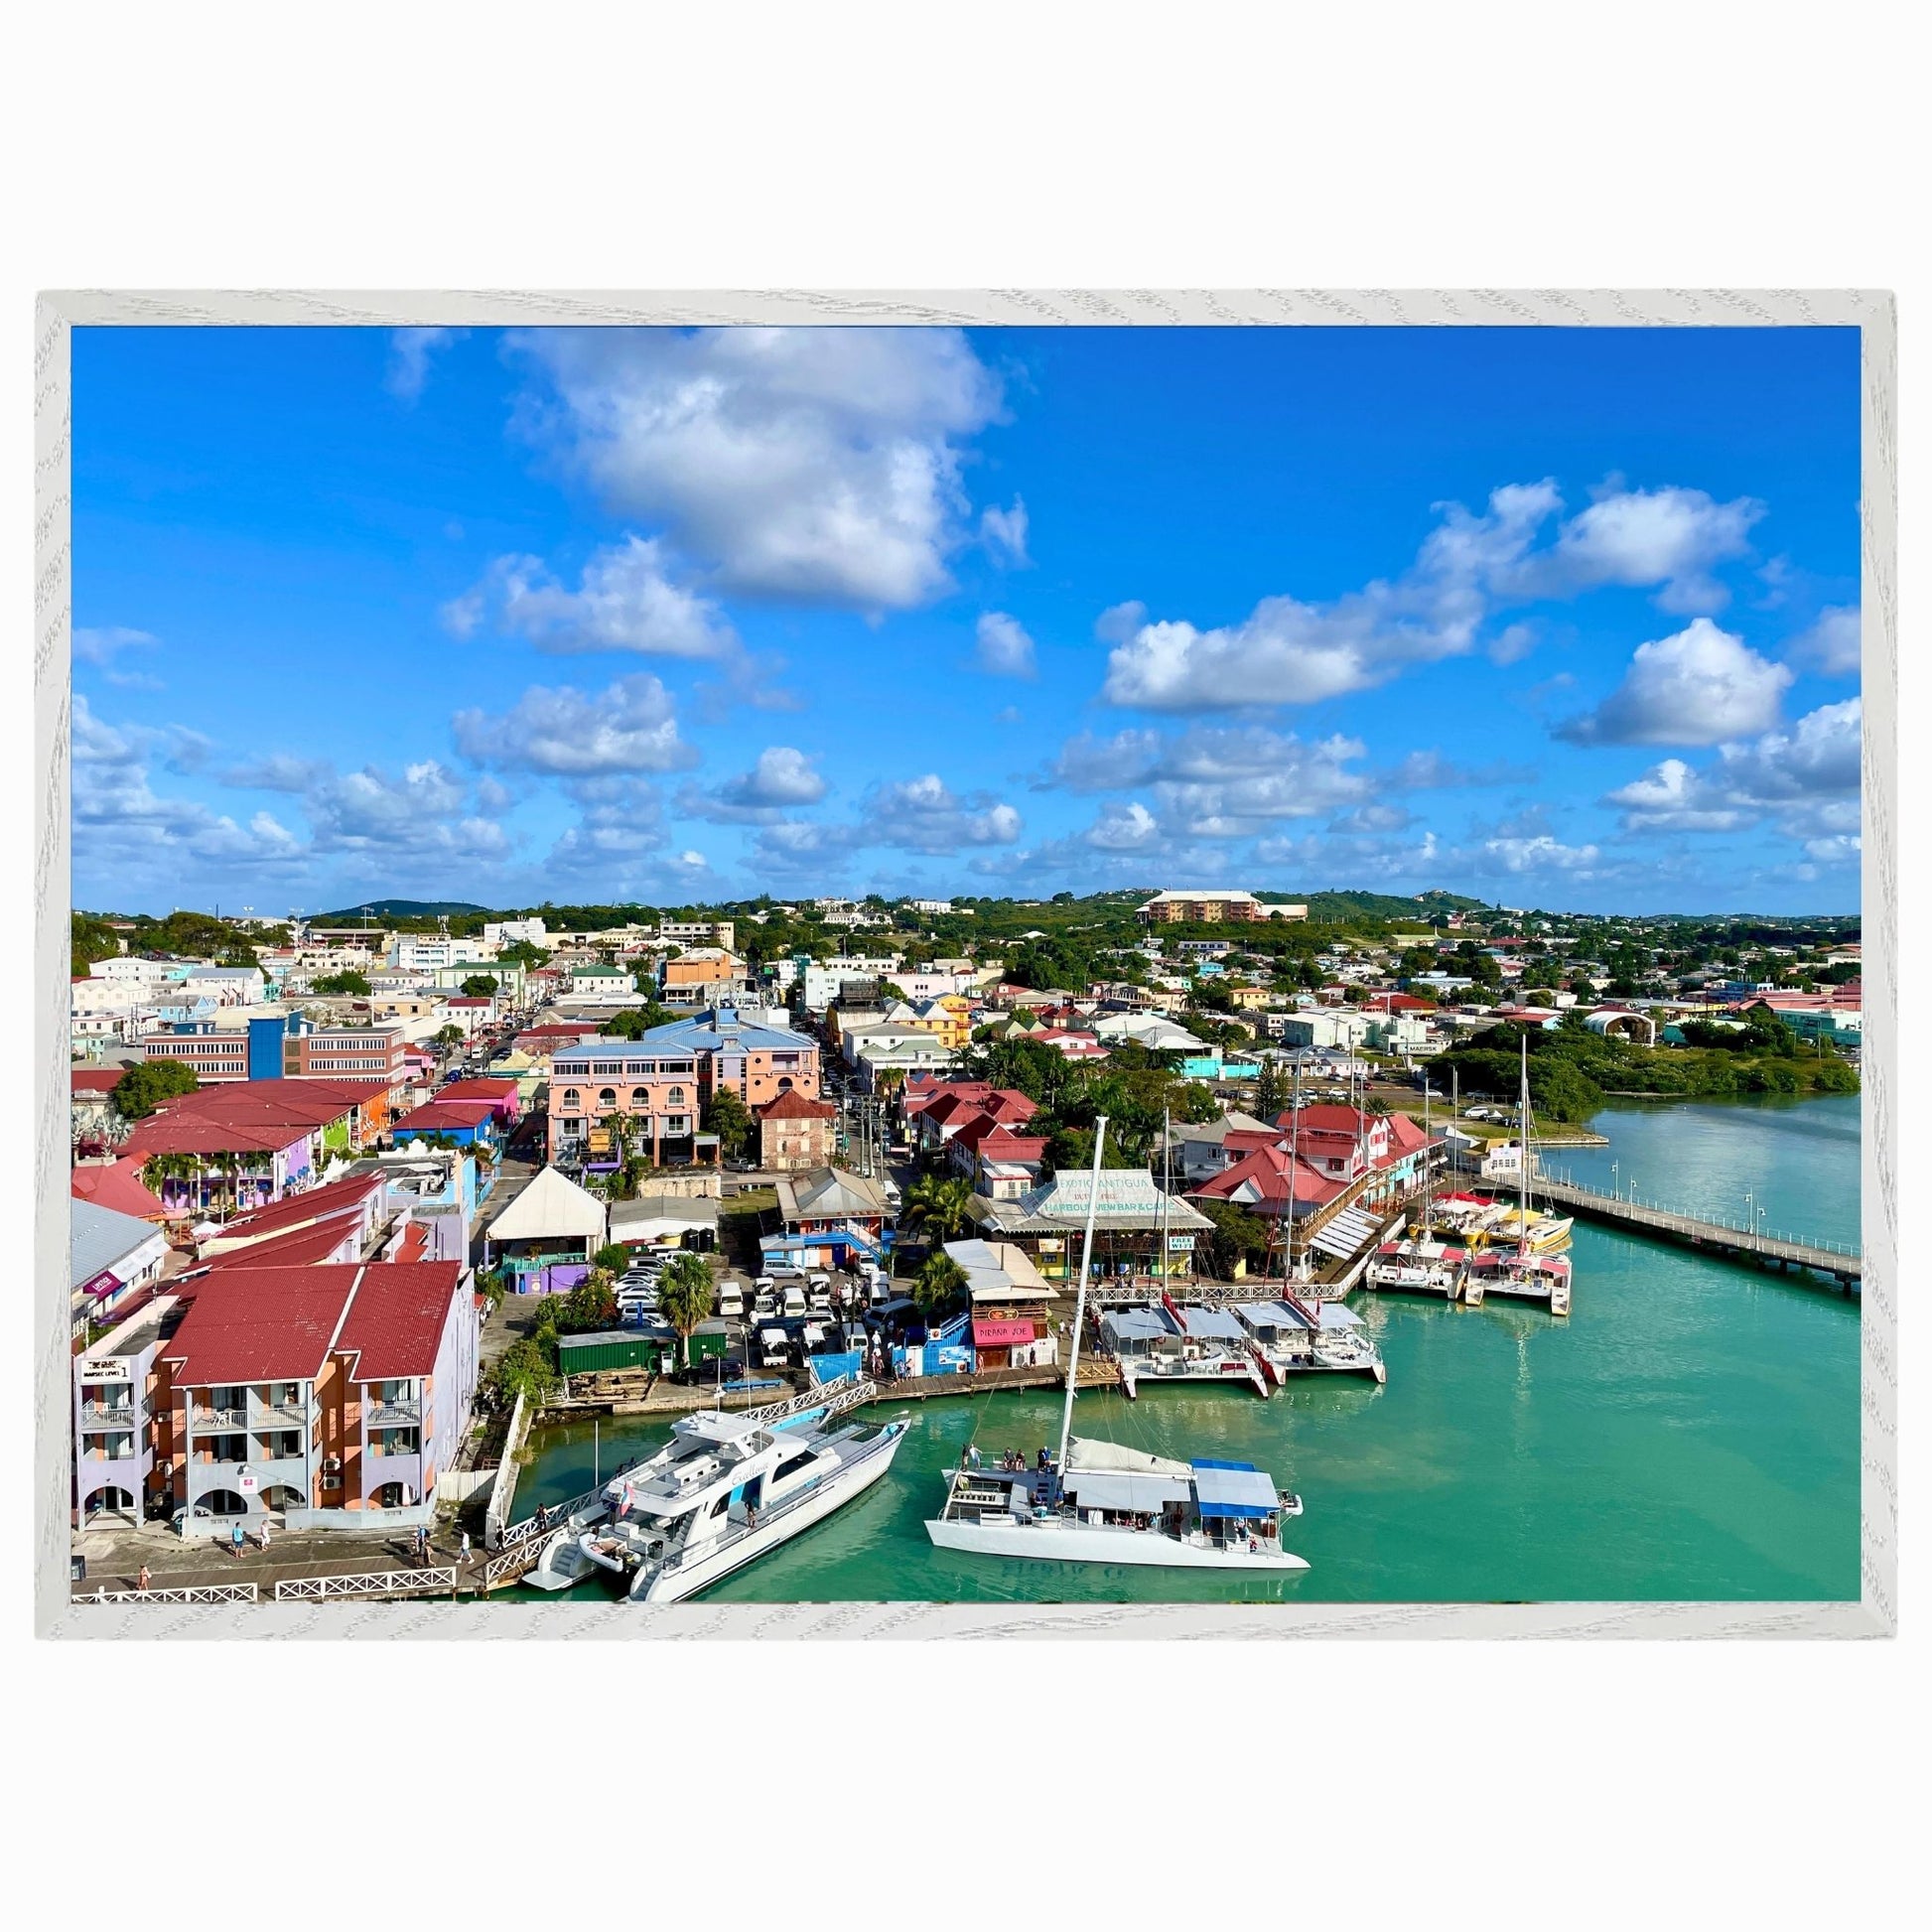 St. Johns - Sightseeing Panorama Detailansicht Paradiesfoto aus der Karibik